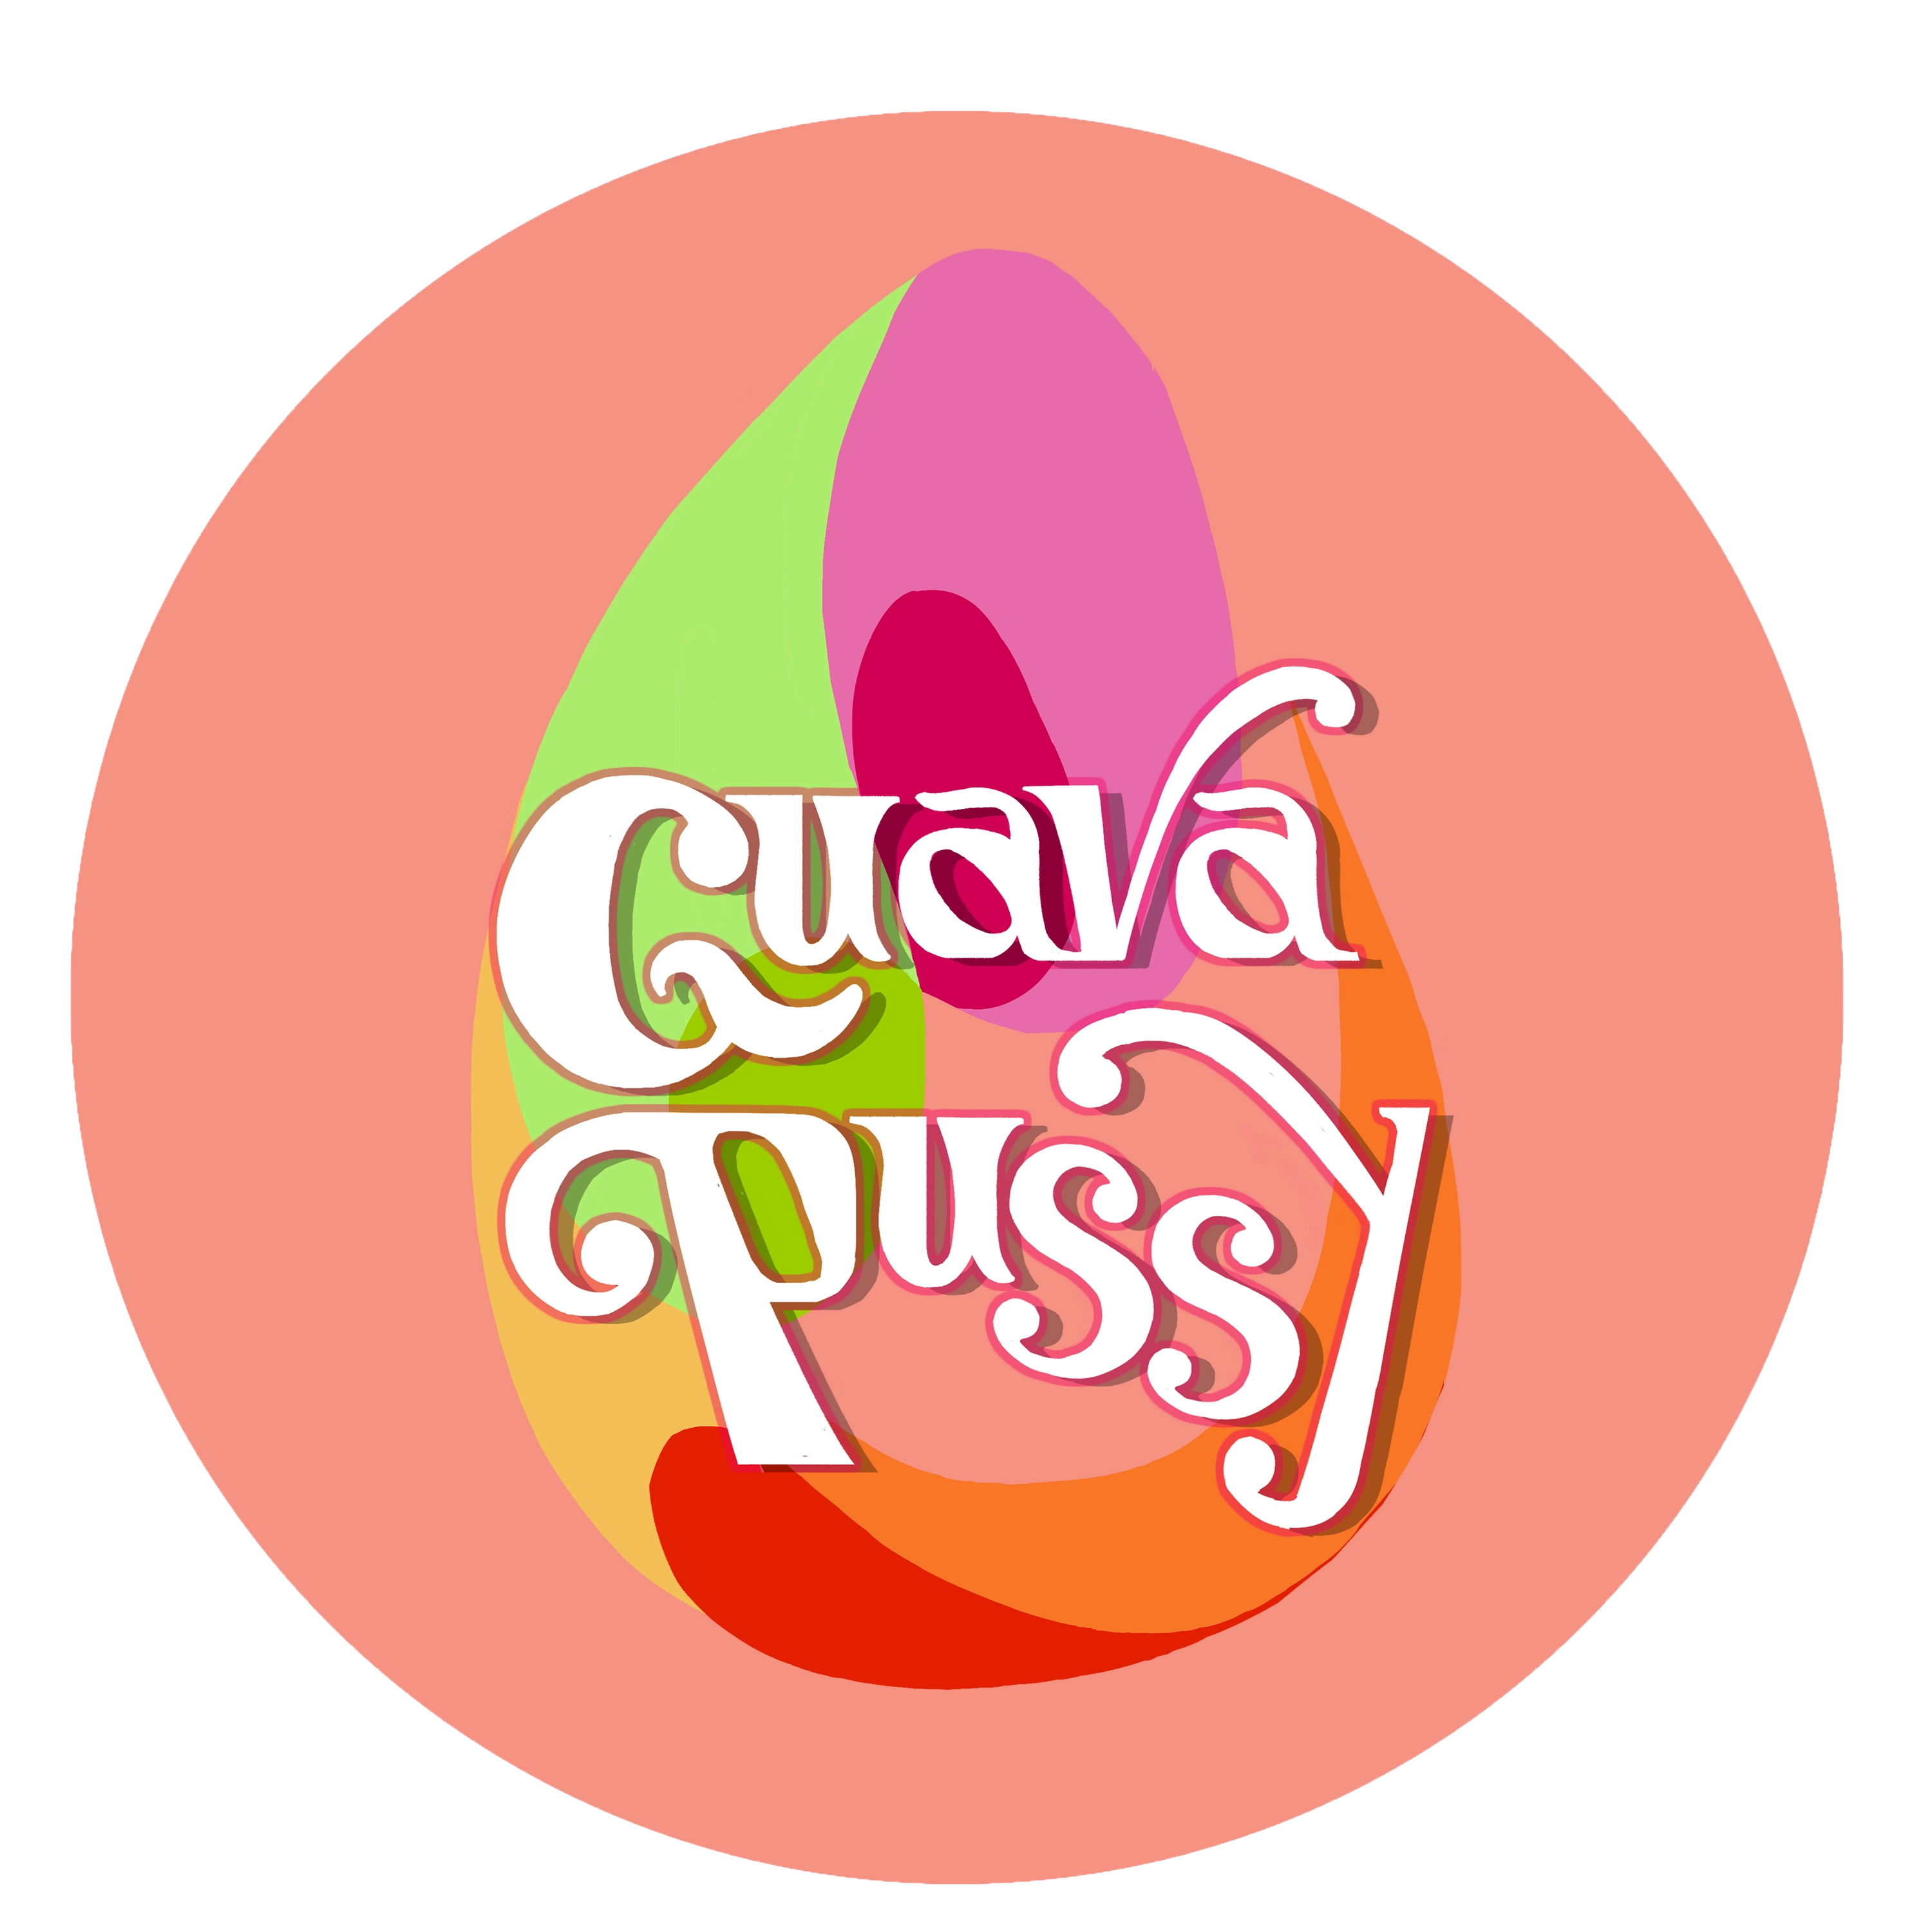 Guava Pussy Zine